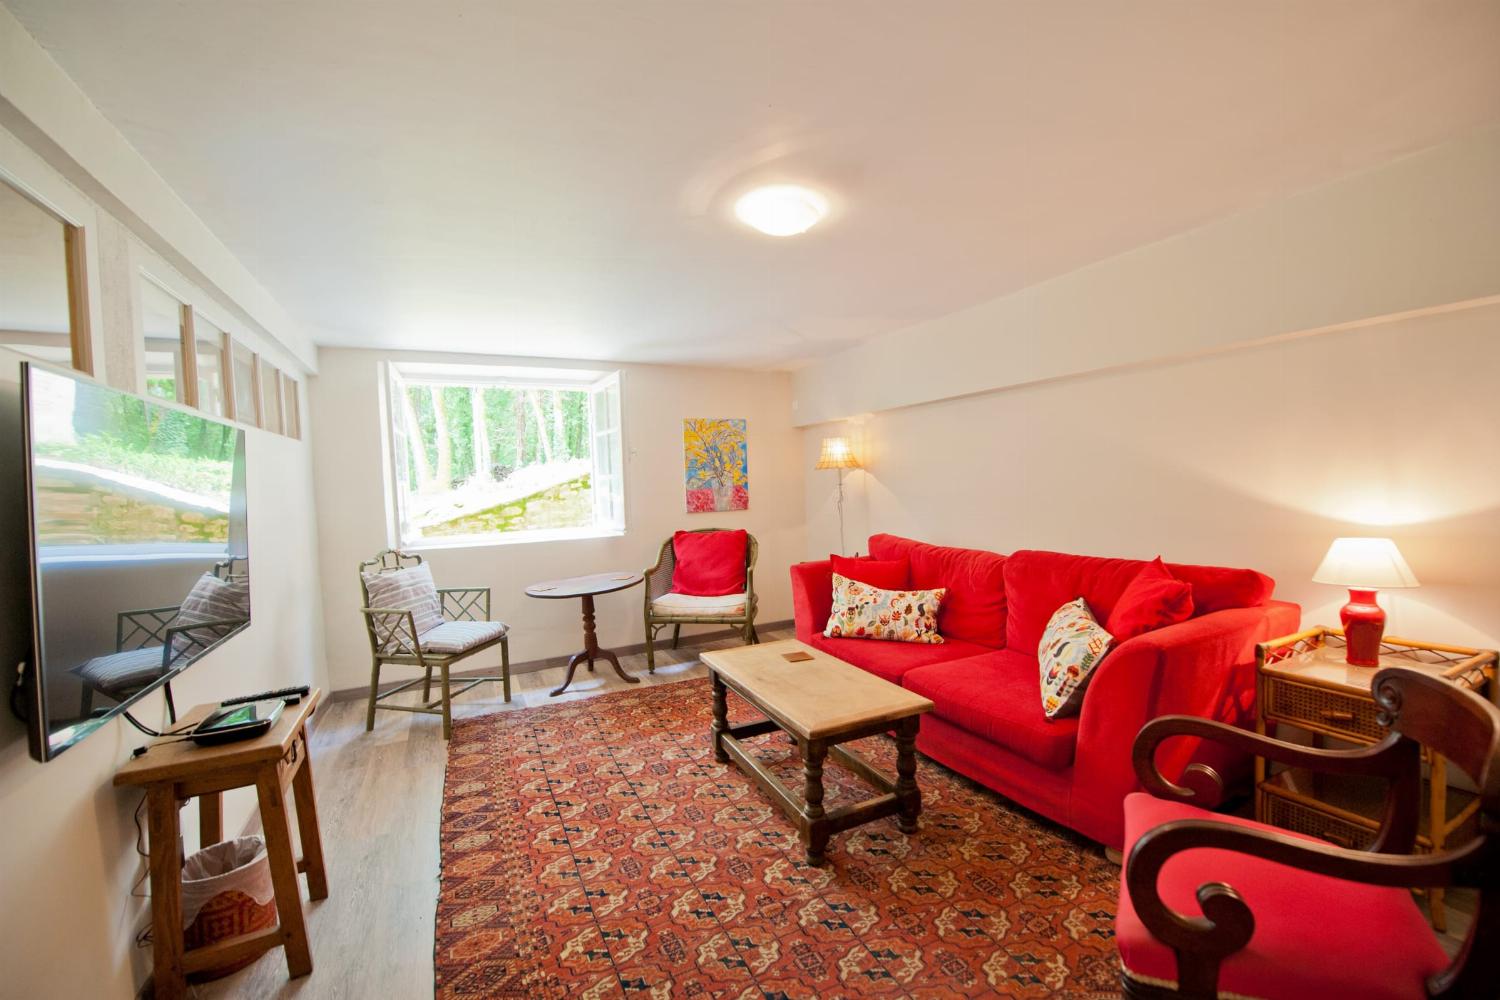 Living room | Rental accommodation in Dordogne